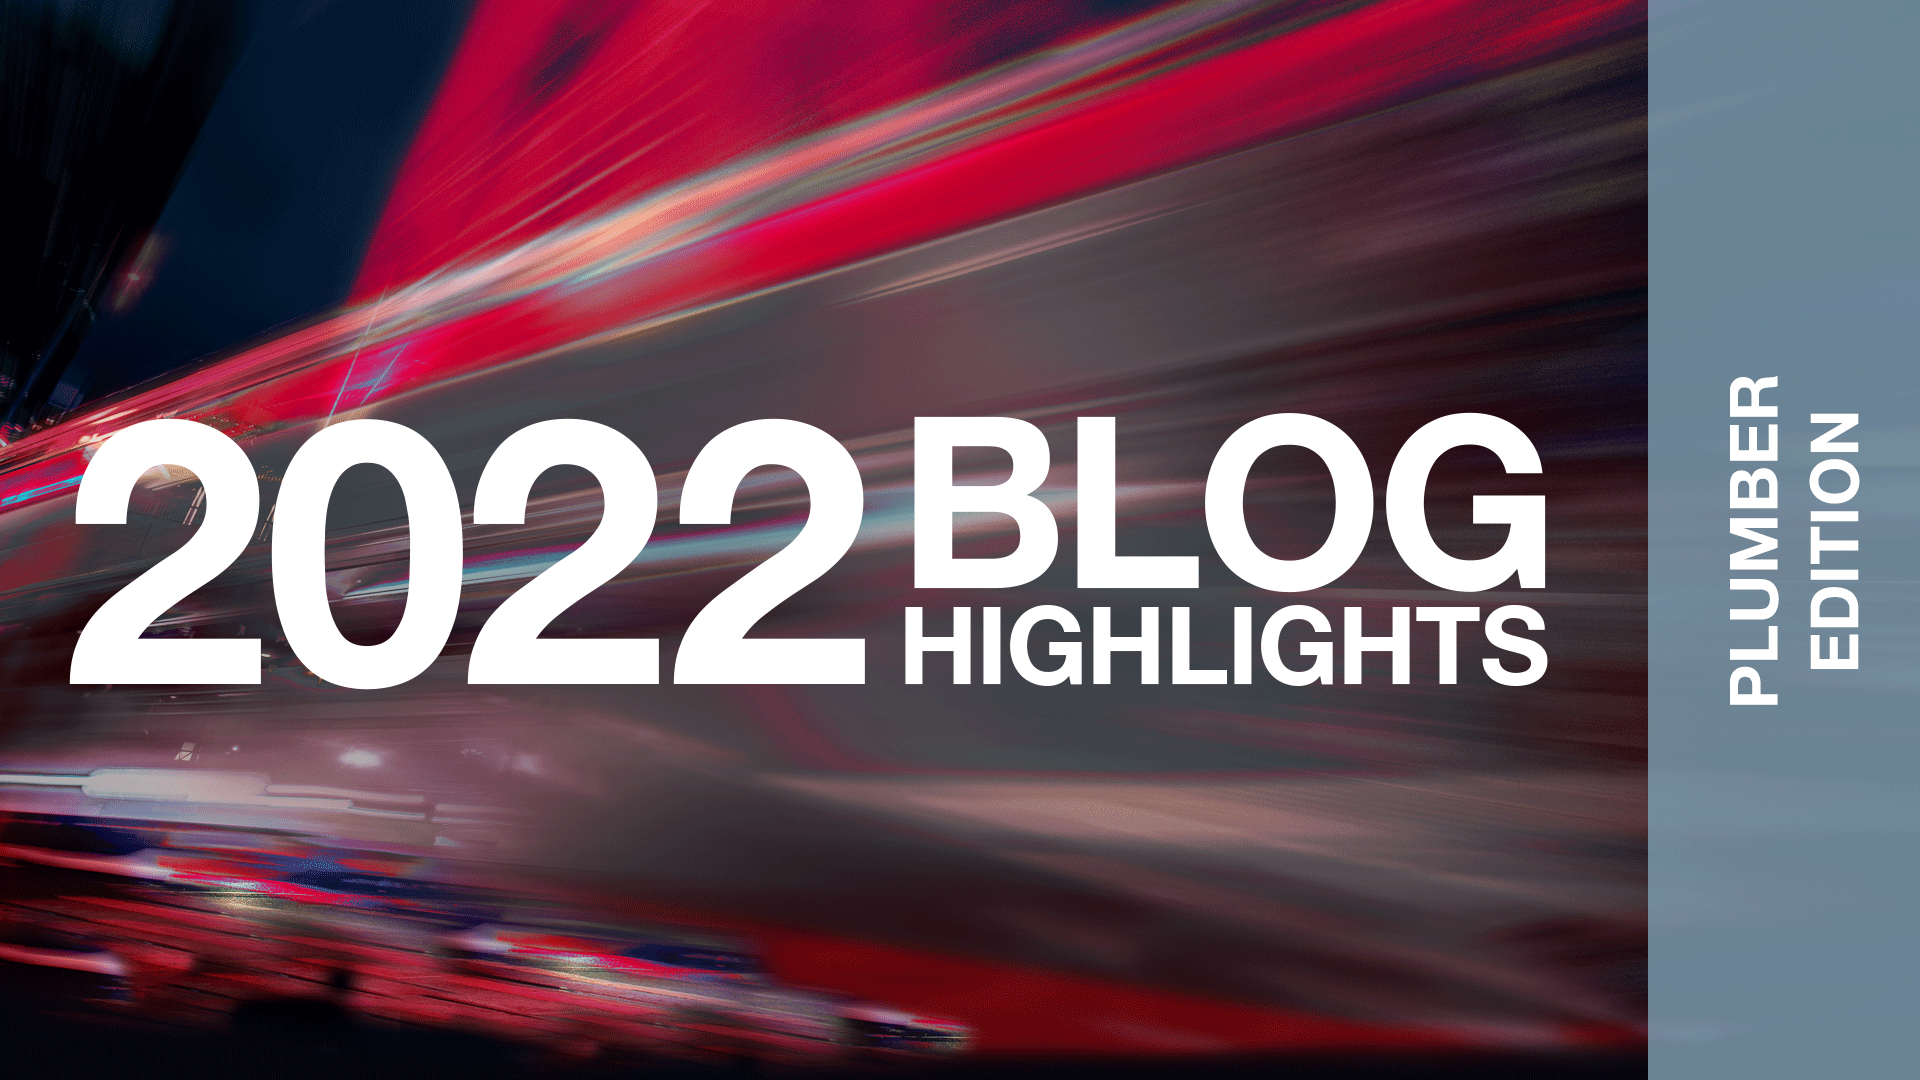 2022 blog highlights plumber edition